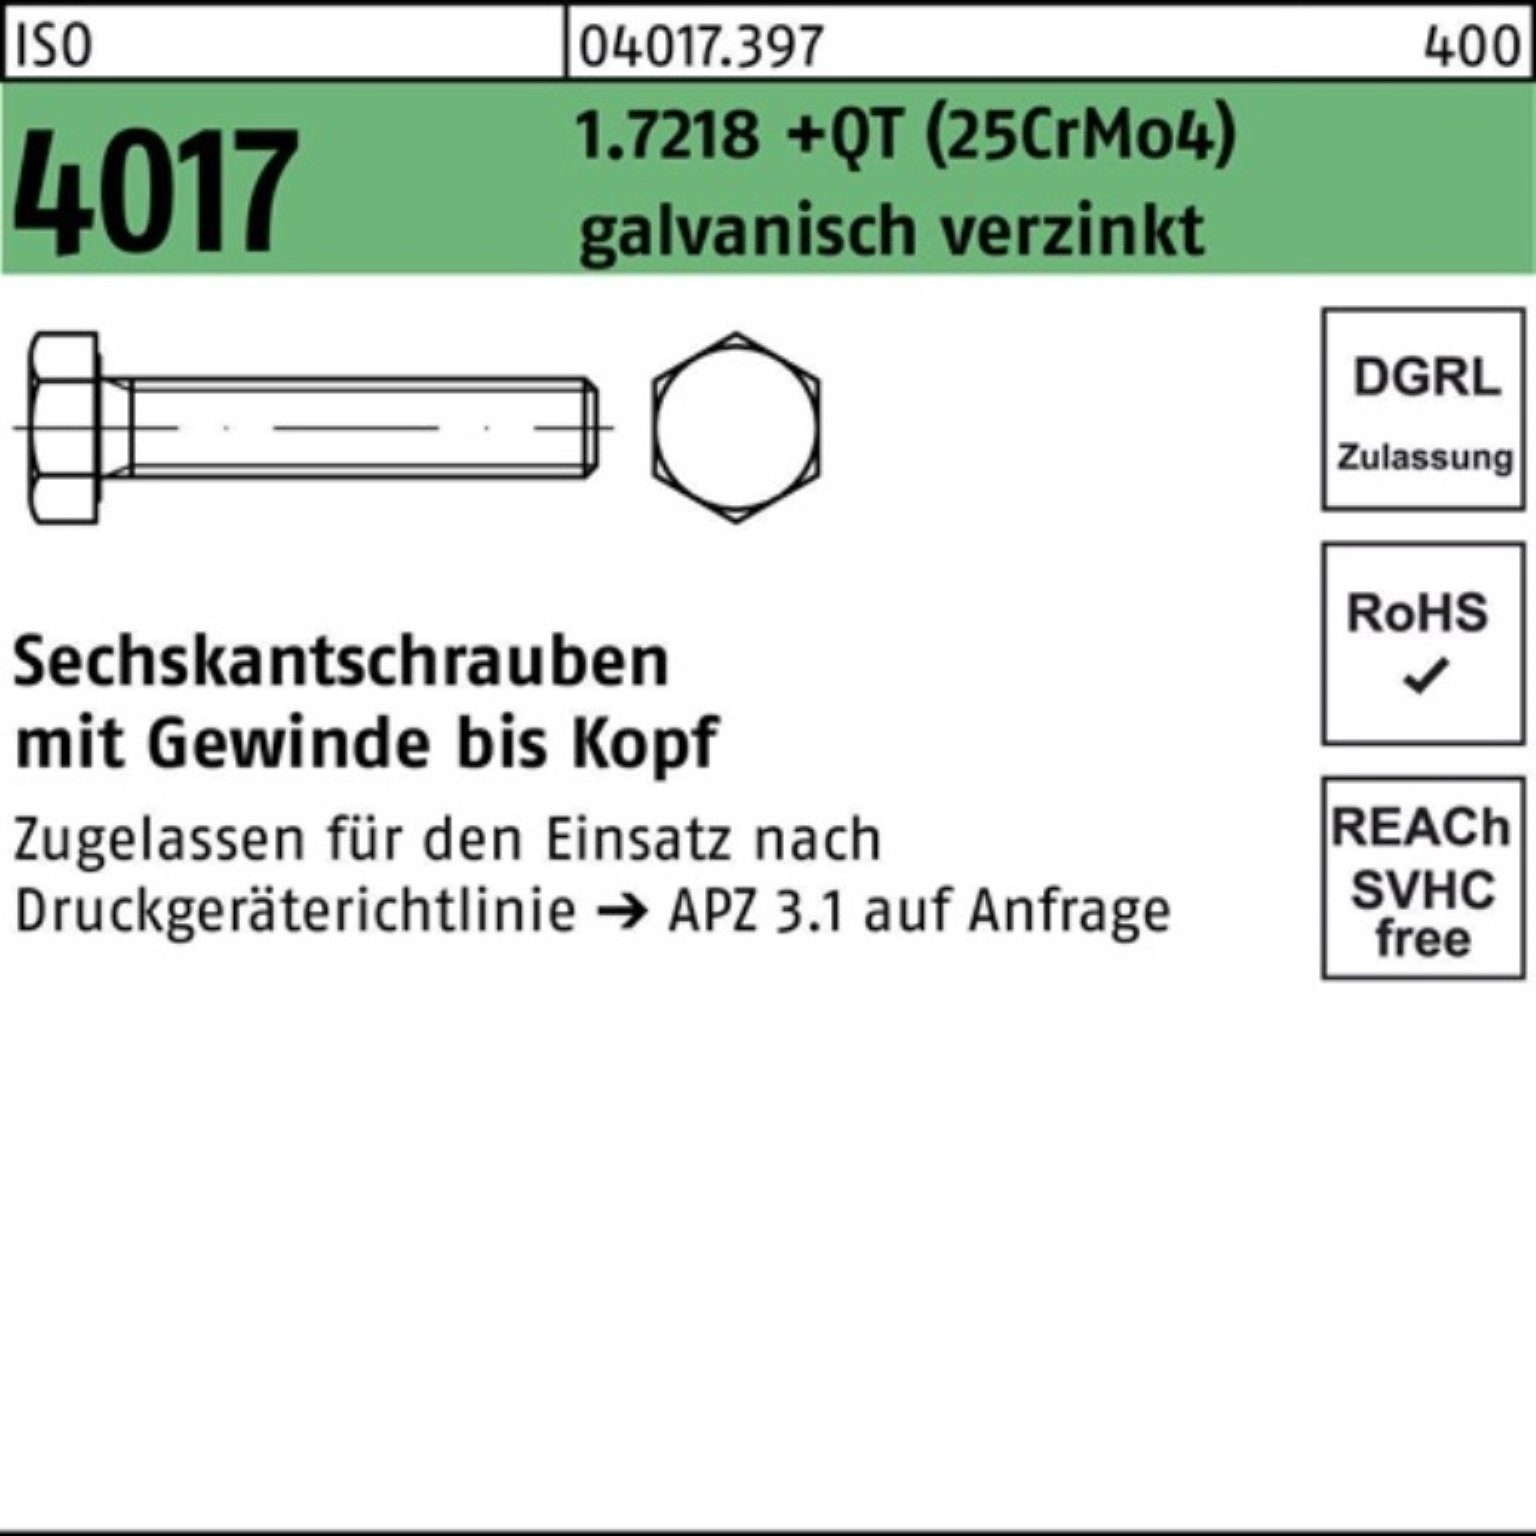 Pack Sechskantschraube 4017 100er M24x75 g ISO 1.7218 VG Bufab (25CrMo4) Sechskantschraube +QT